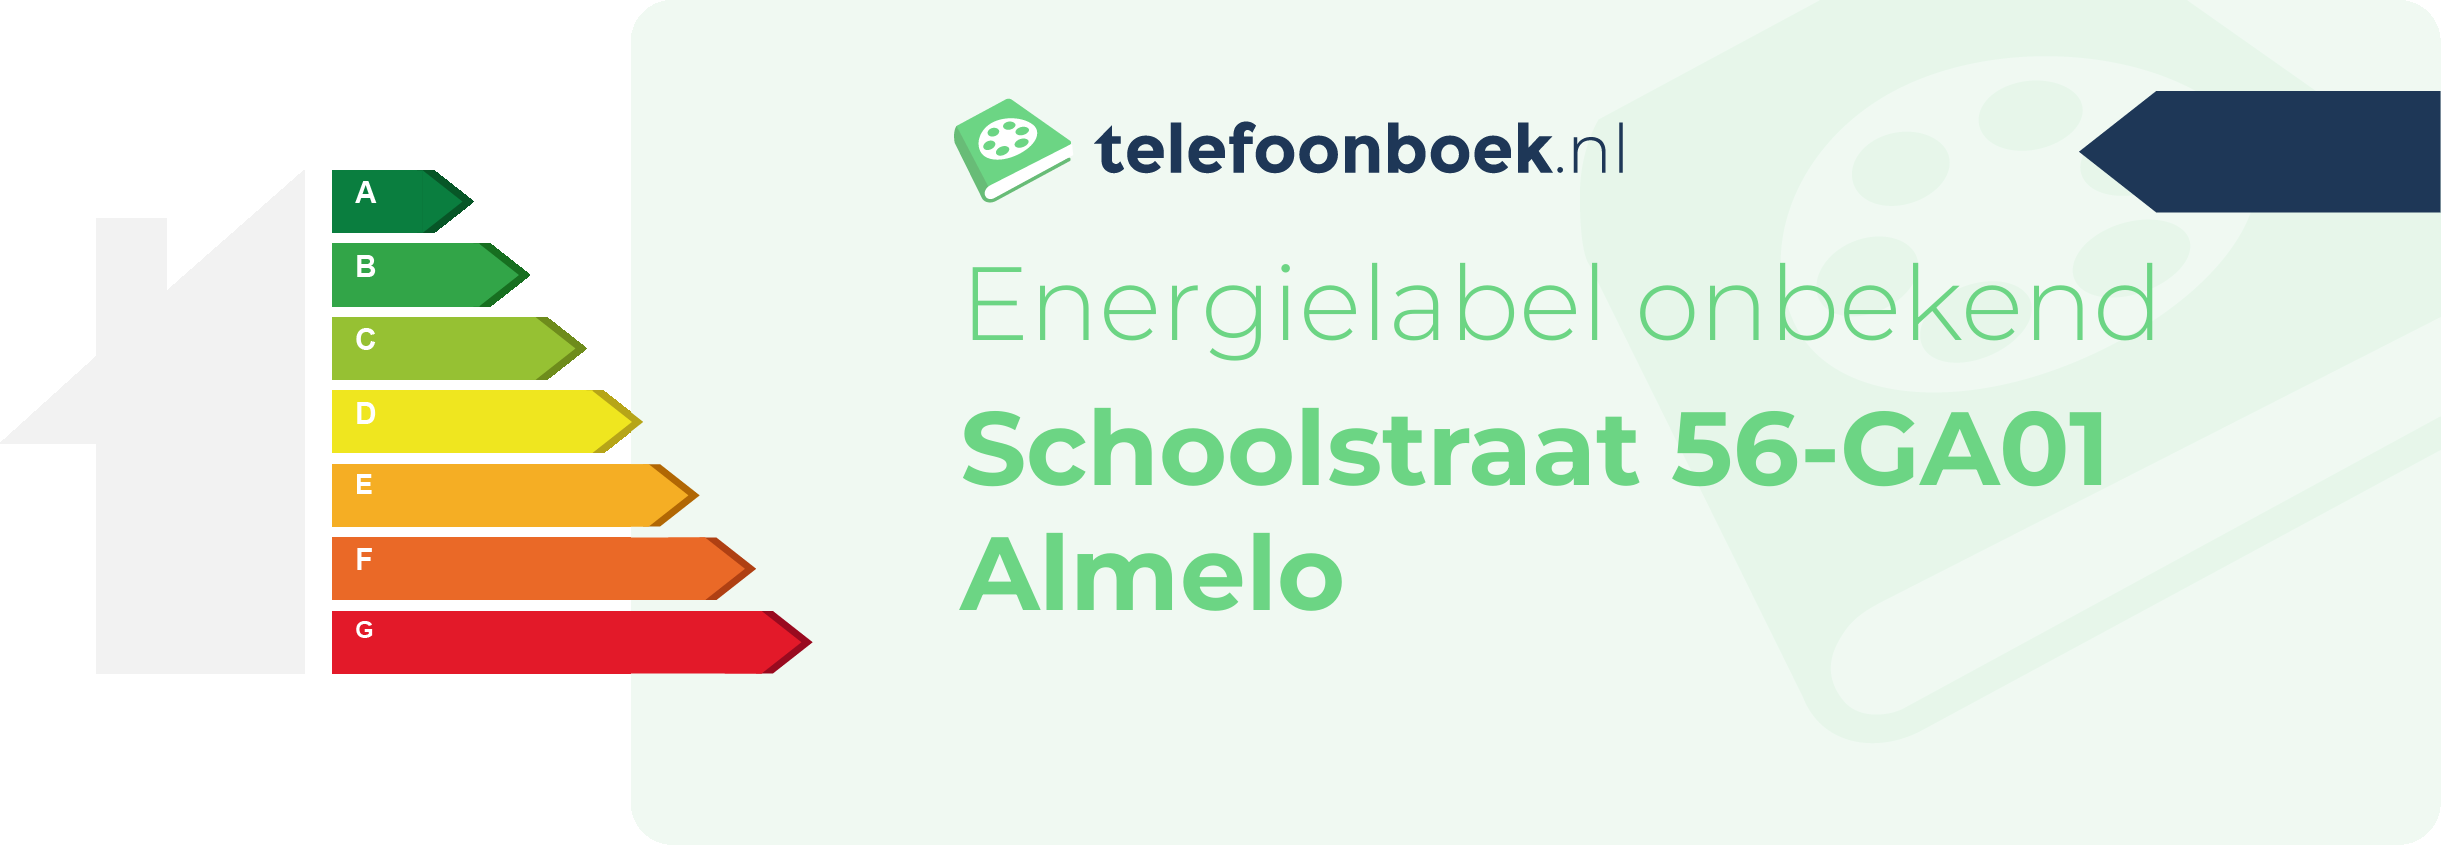 Energielabel Schoolstraat 56-GA01 Almelo